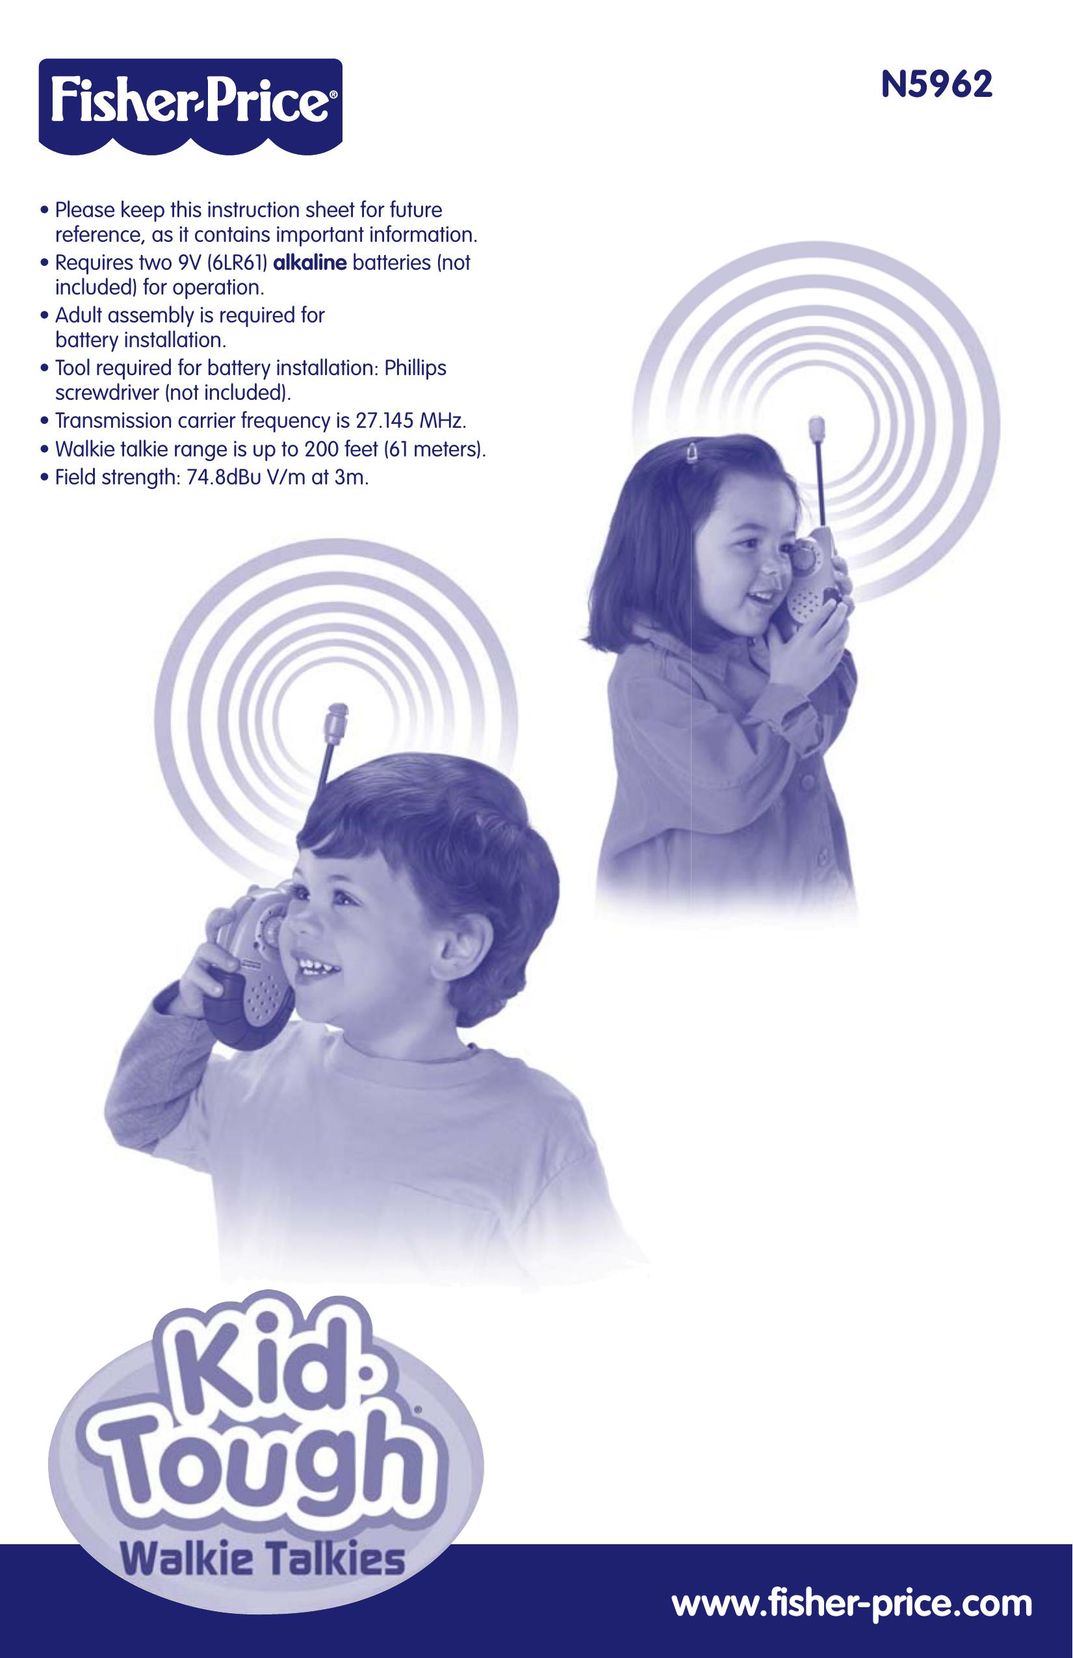 Fisher-Price N5962 Two-Way Radio User Manual